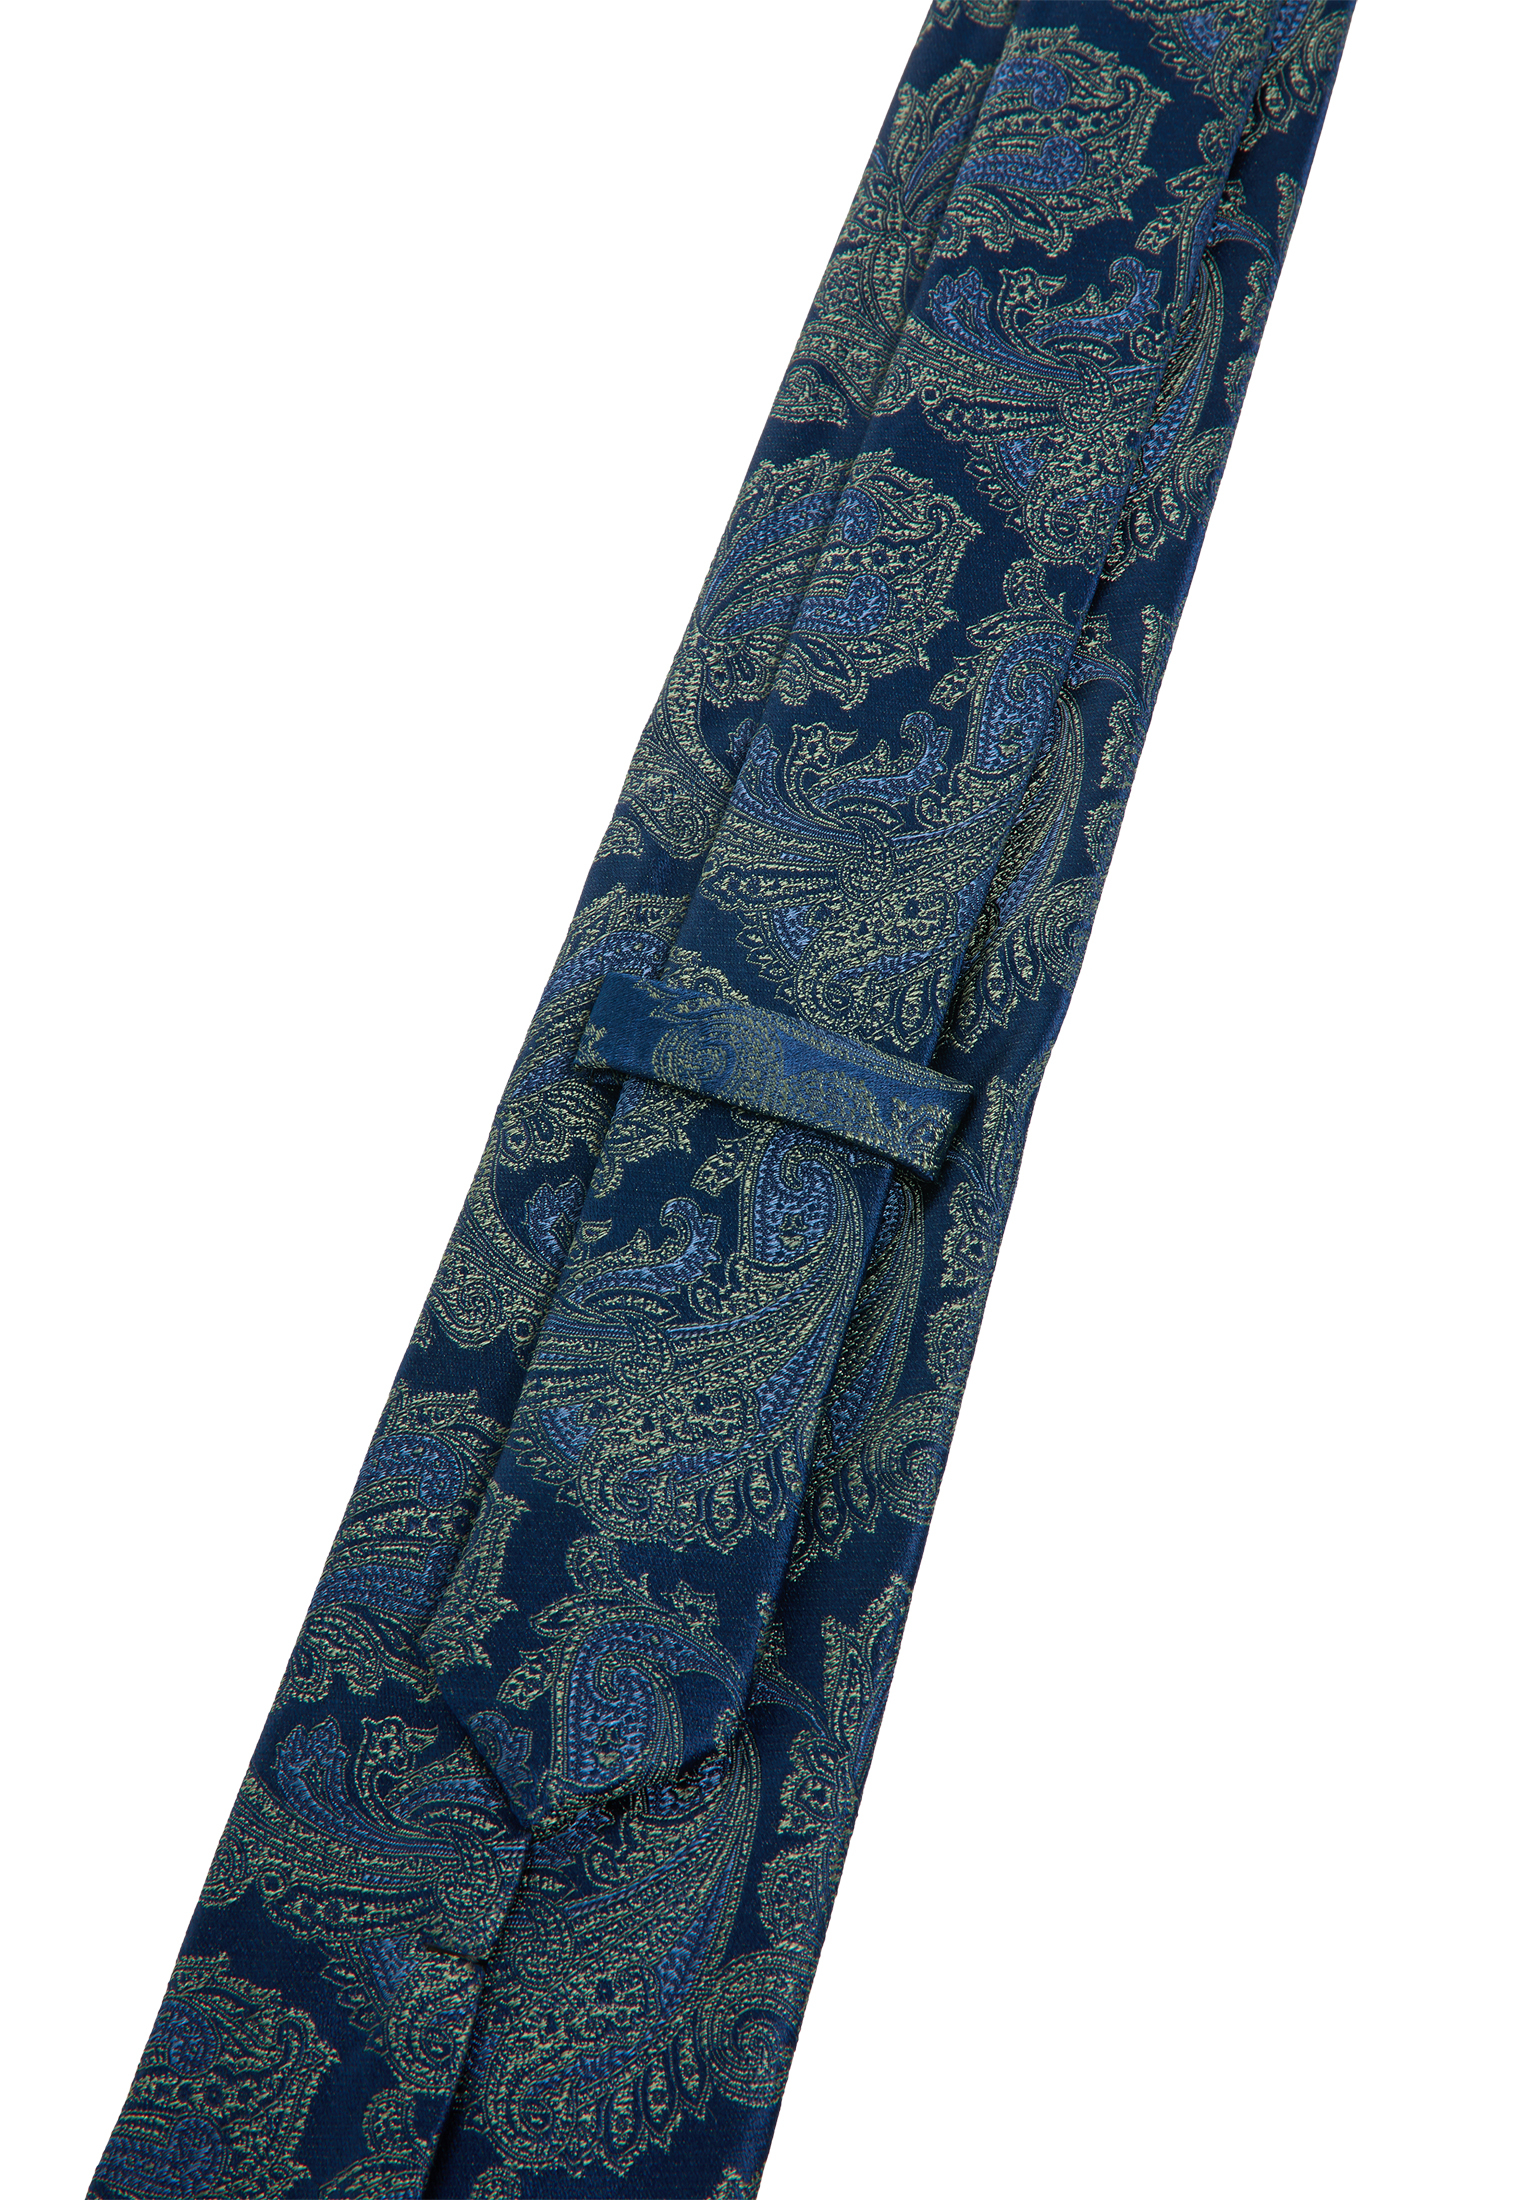 Krawatte in blau/grün gemustert | blau/grün | 142 | 1AC01884-81-48-142